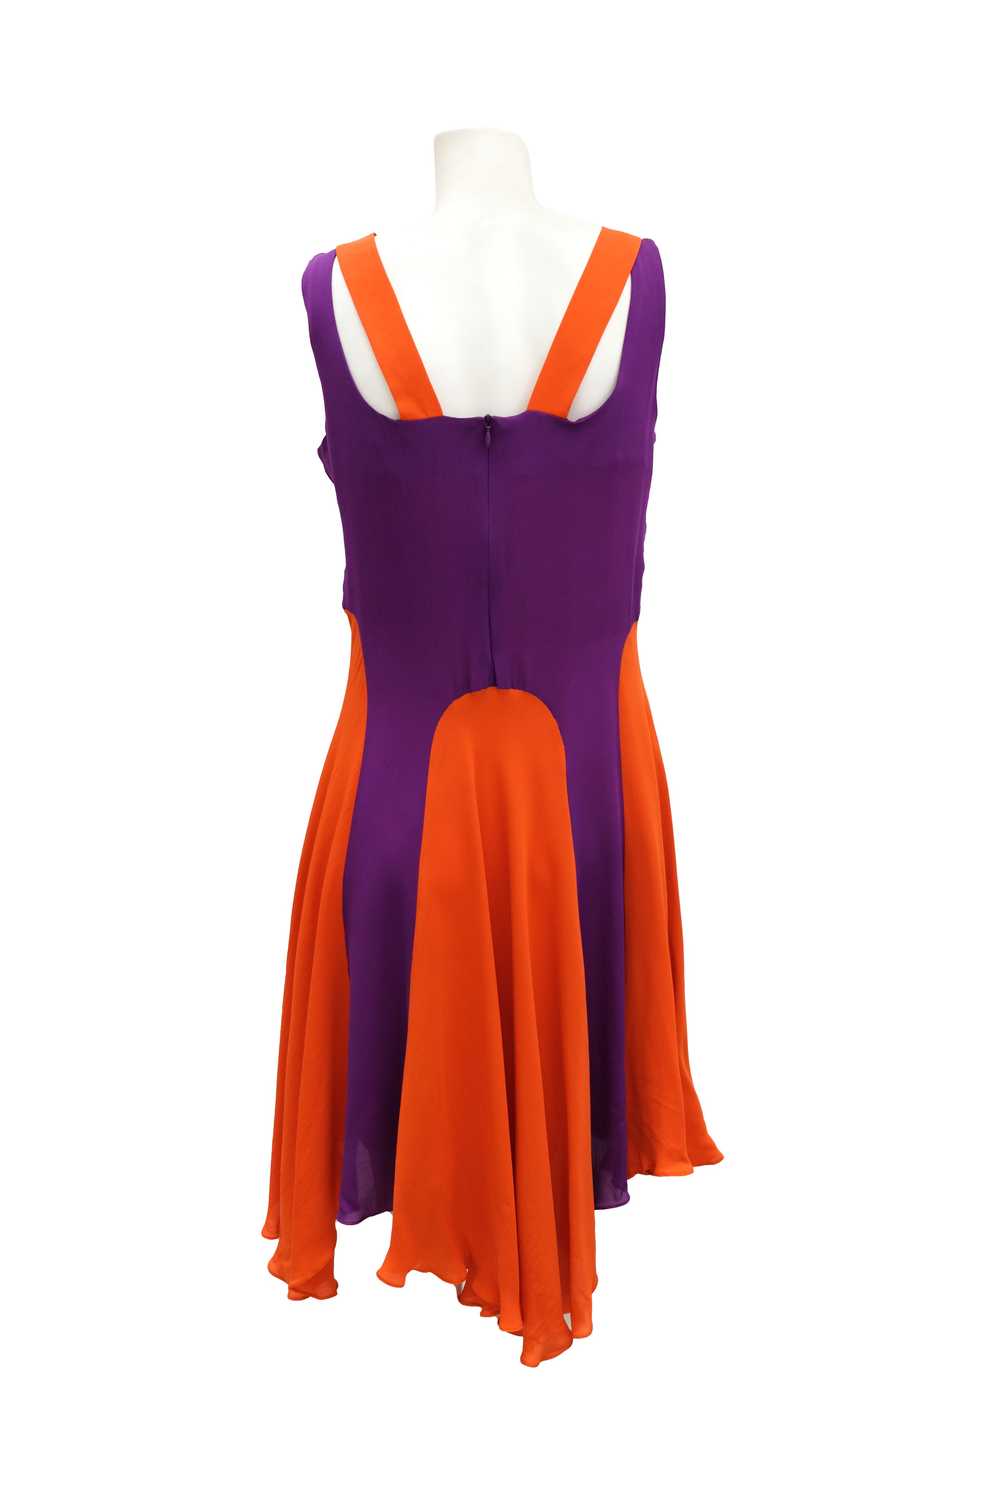 Eley Kishimoto Sun Dress in Orange and Purple Sil… - image 3